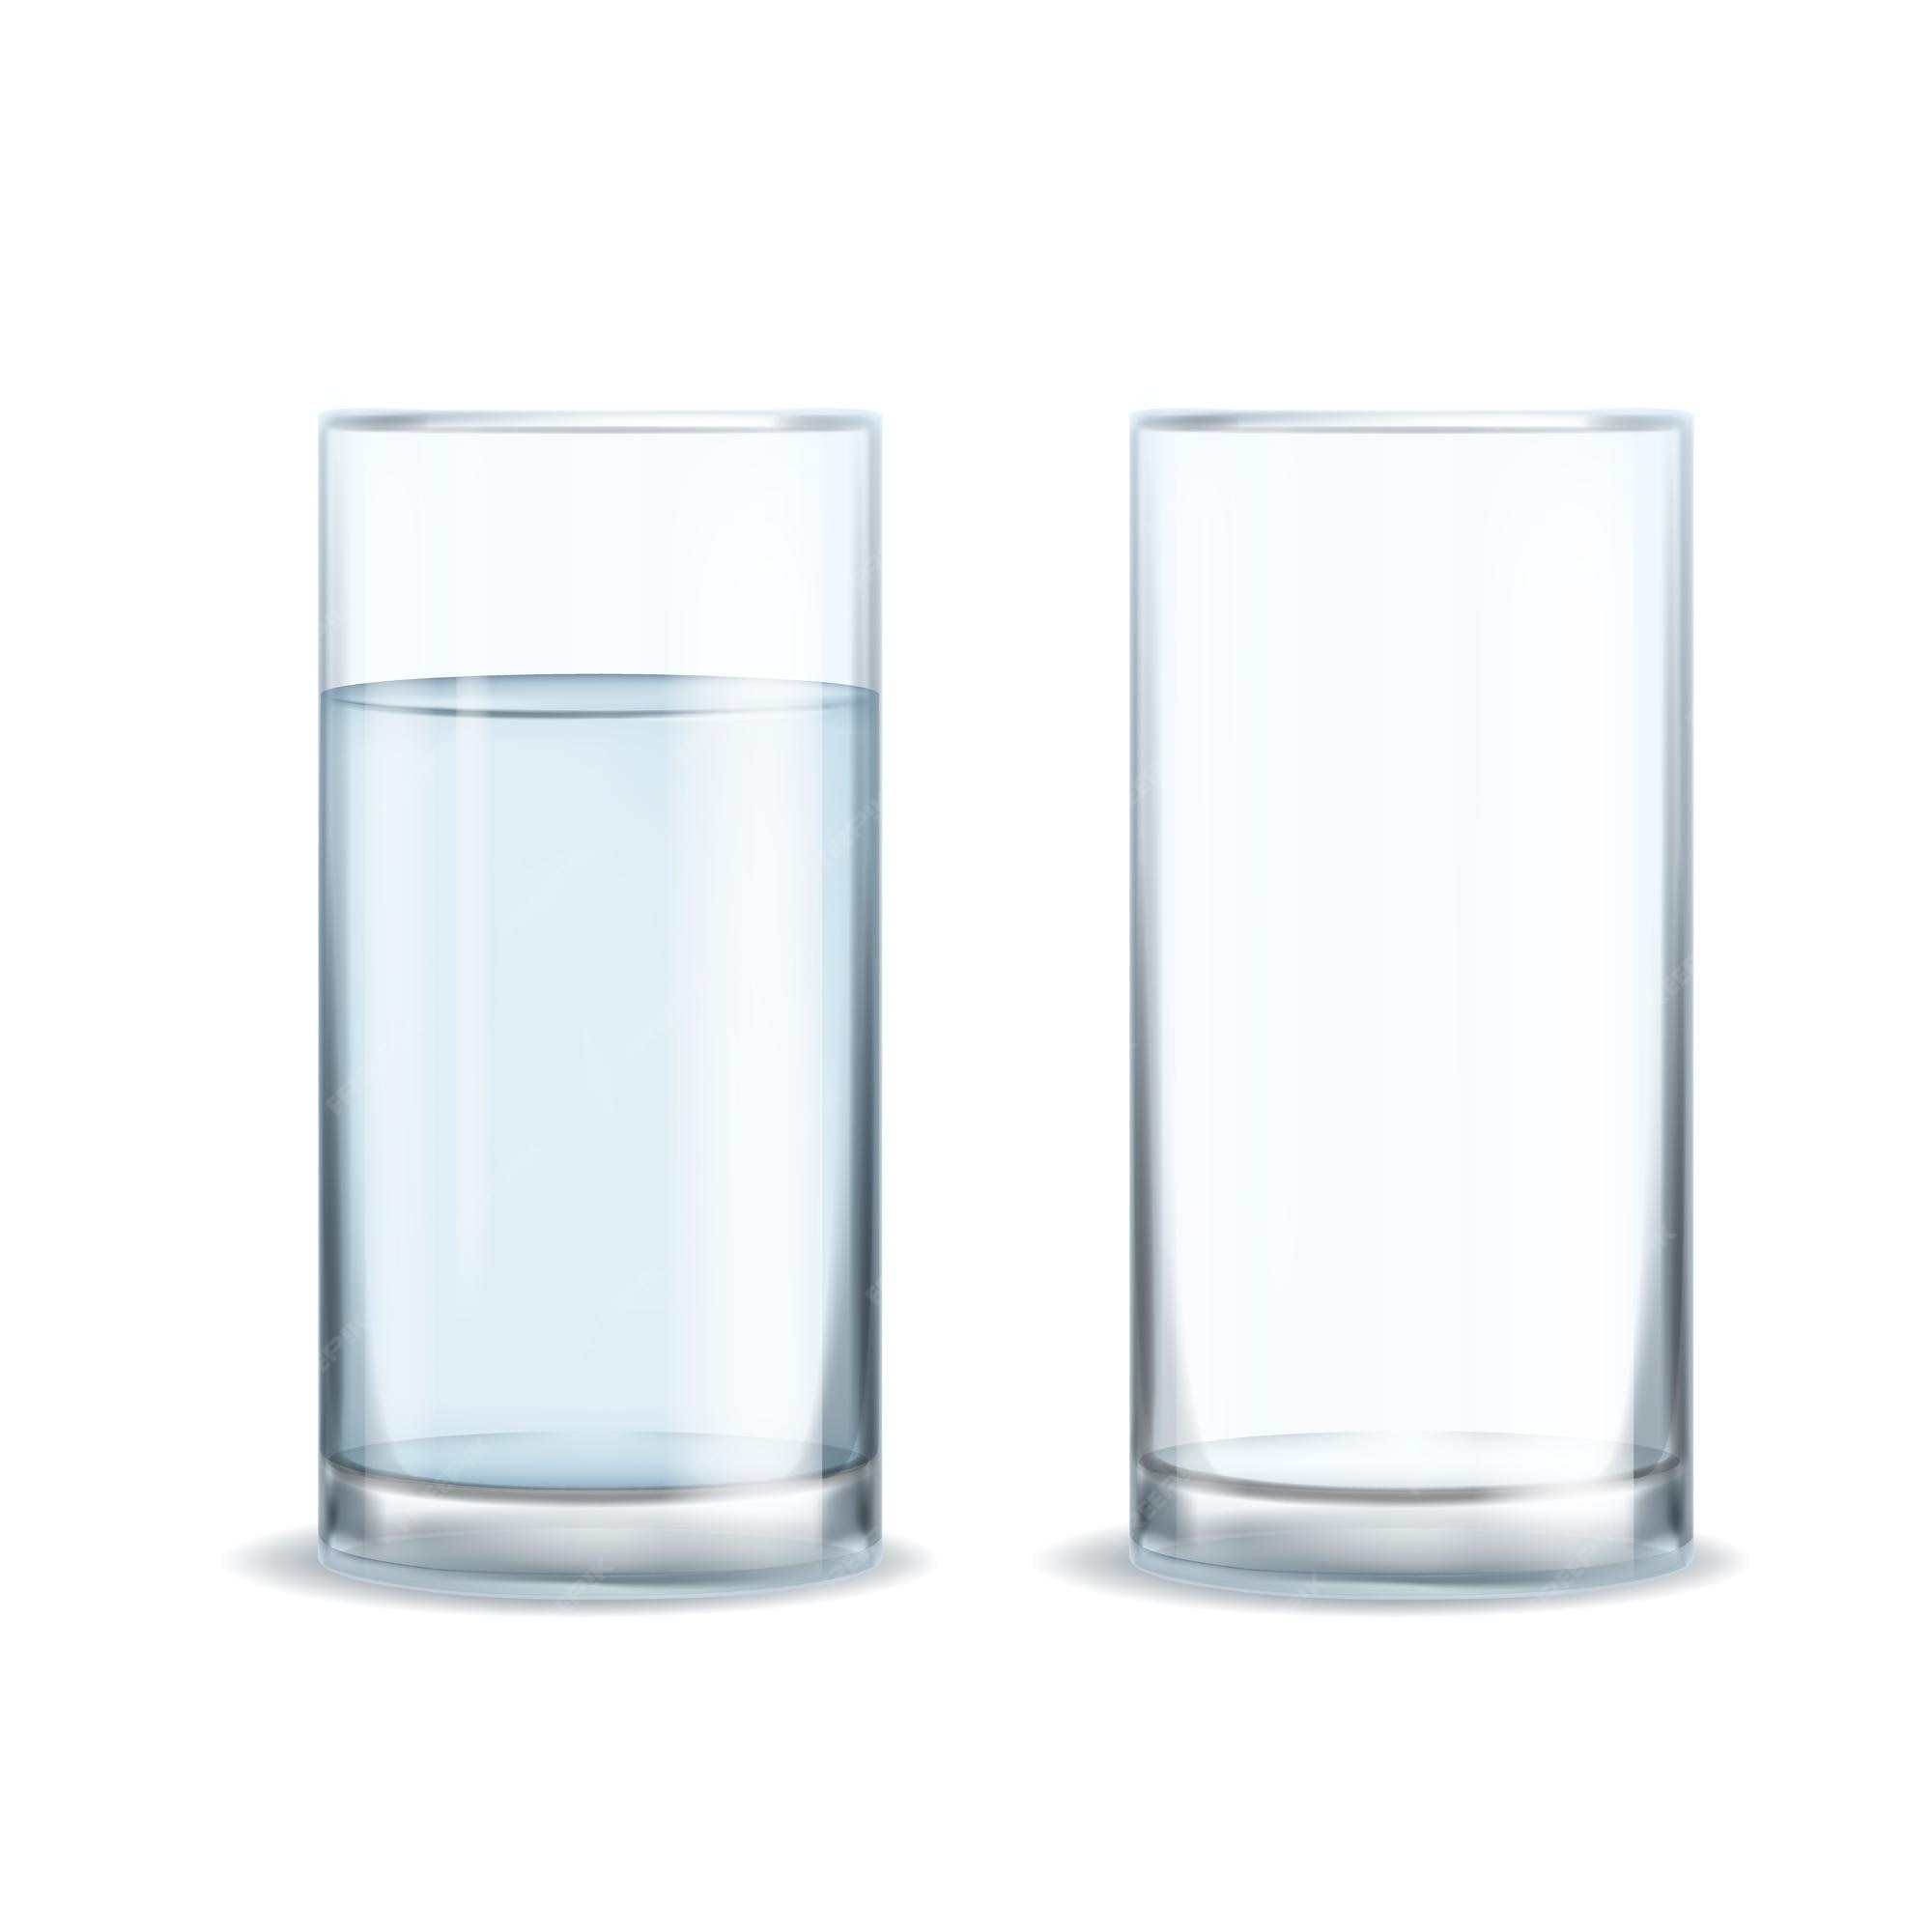 Transparent water glass